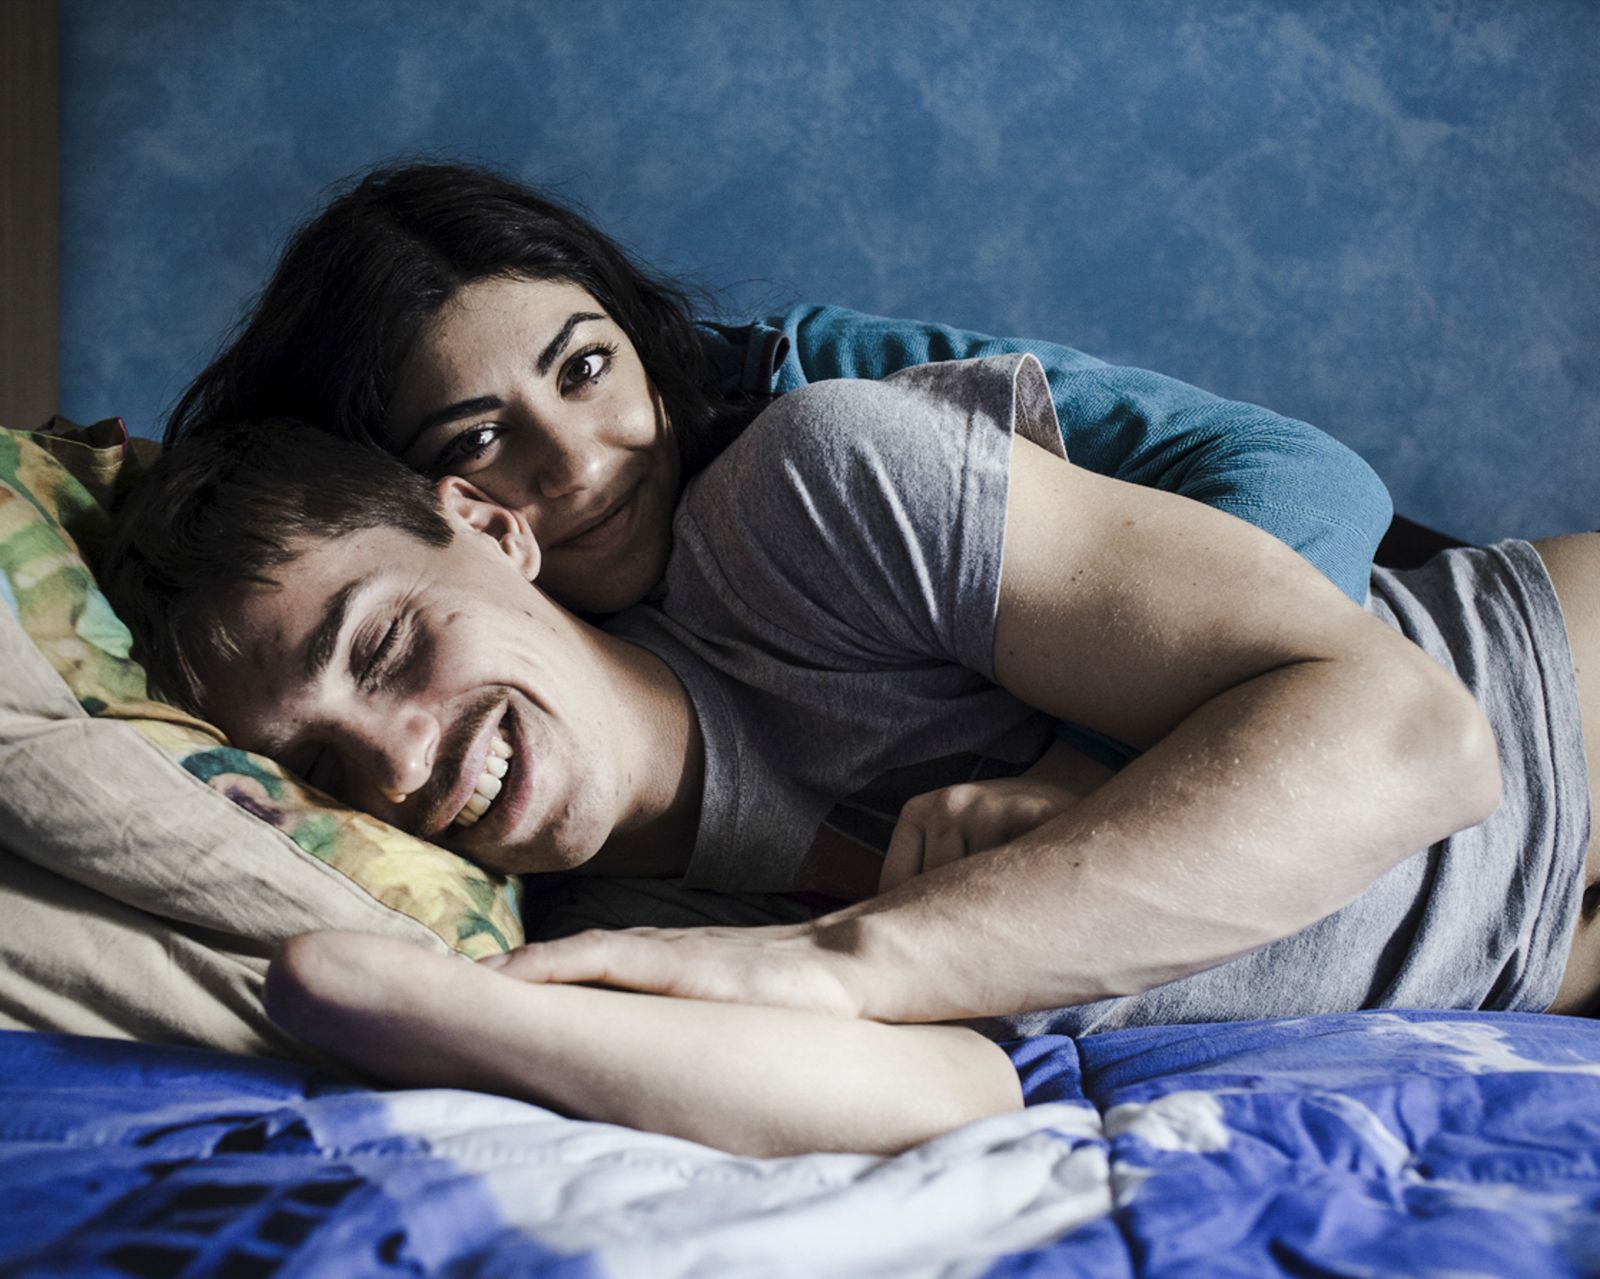 © Mattia Crocetti - Cosmic love, Nicolas and his girlfriend Vanessa in their bed,Novalesa, Italy.